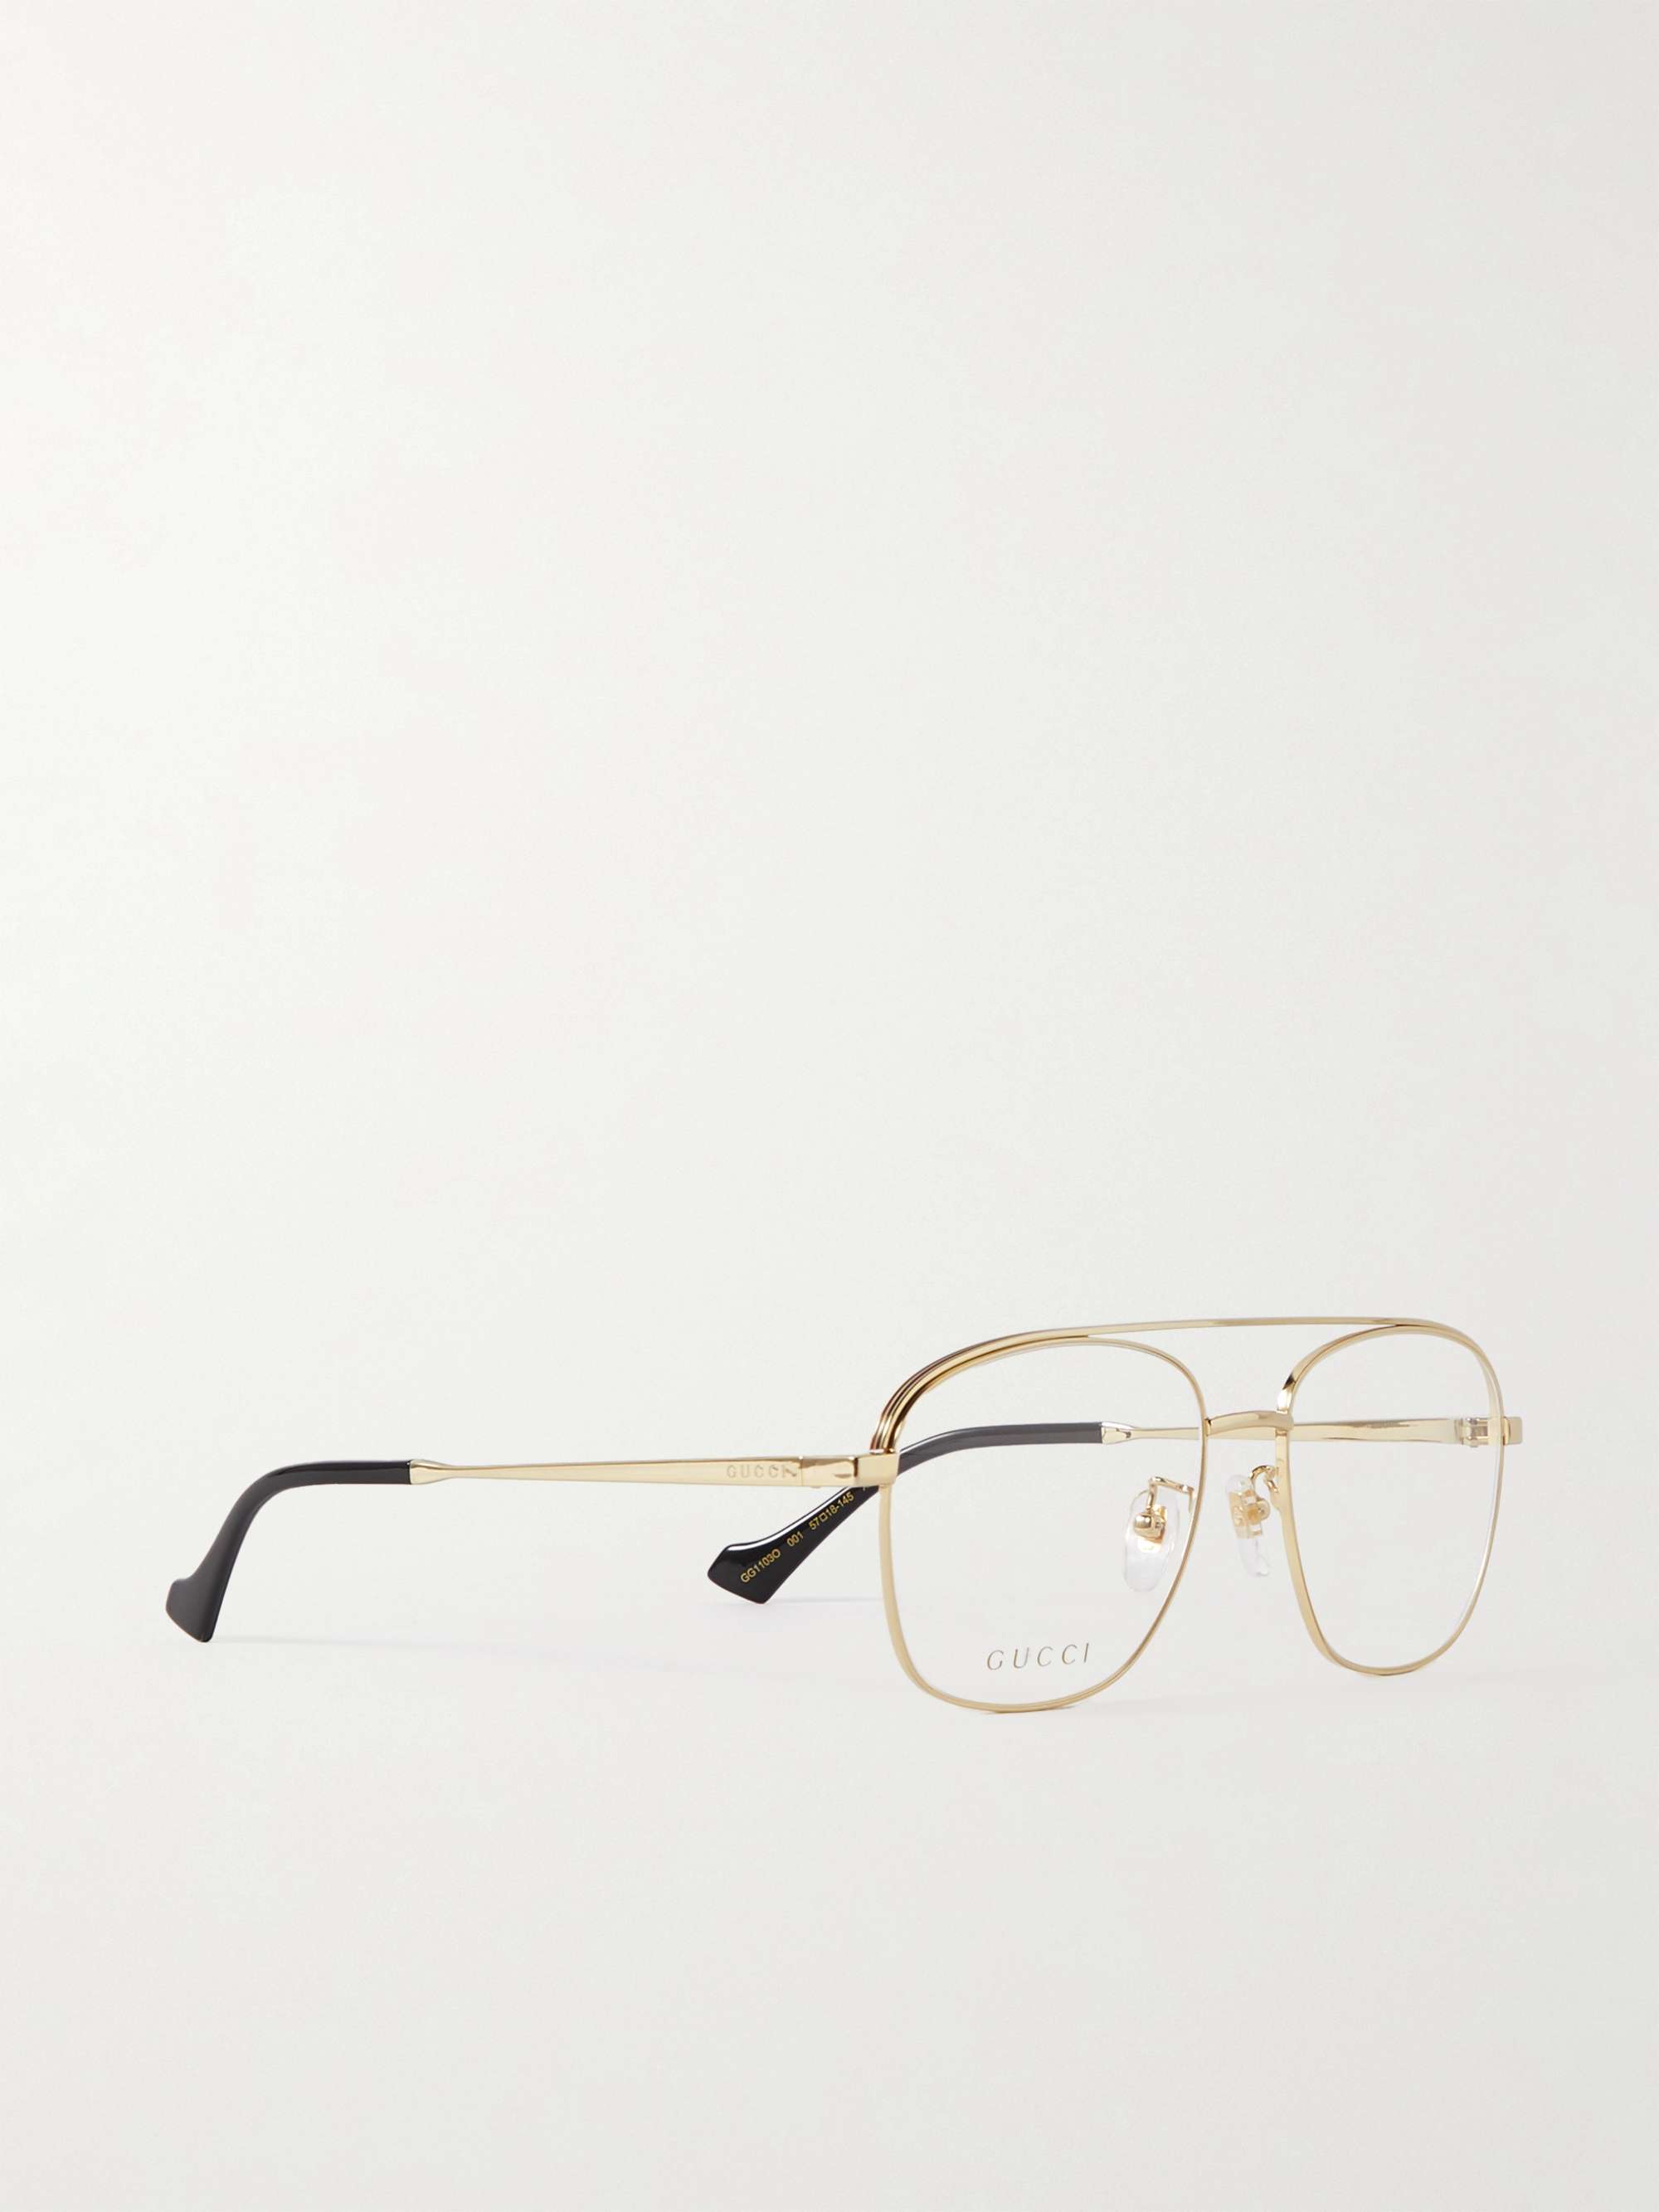 GUCCI EYEWEAR Aviator-Style Gold-Tone Optical Glasses